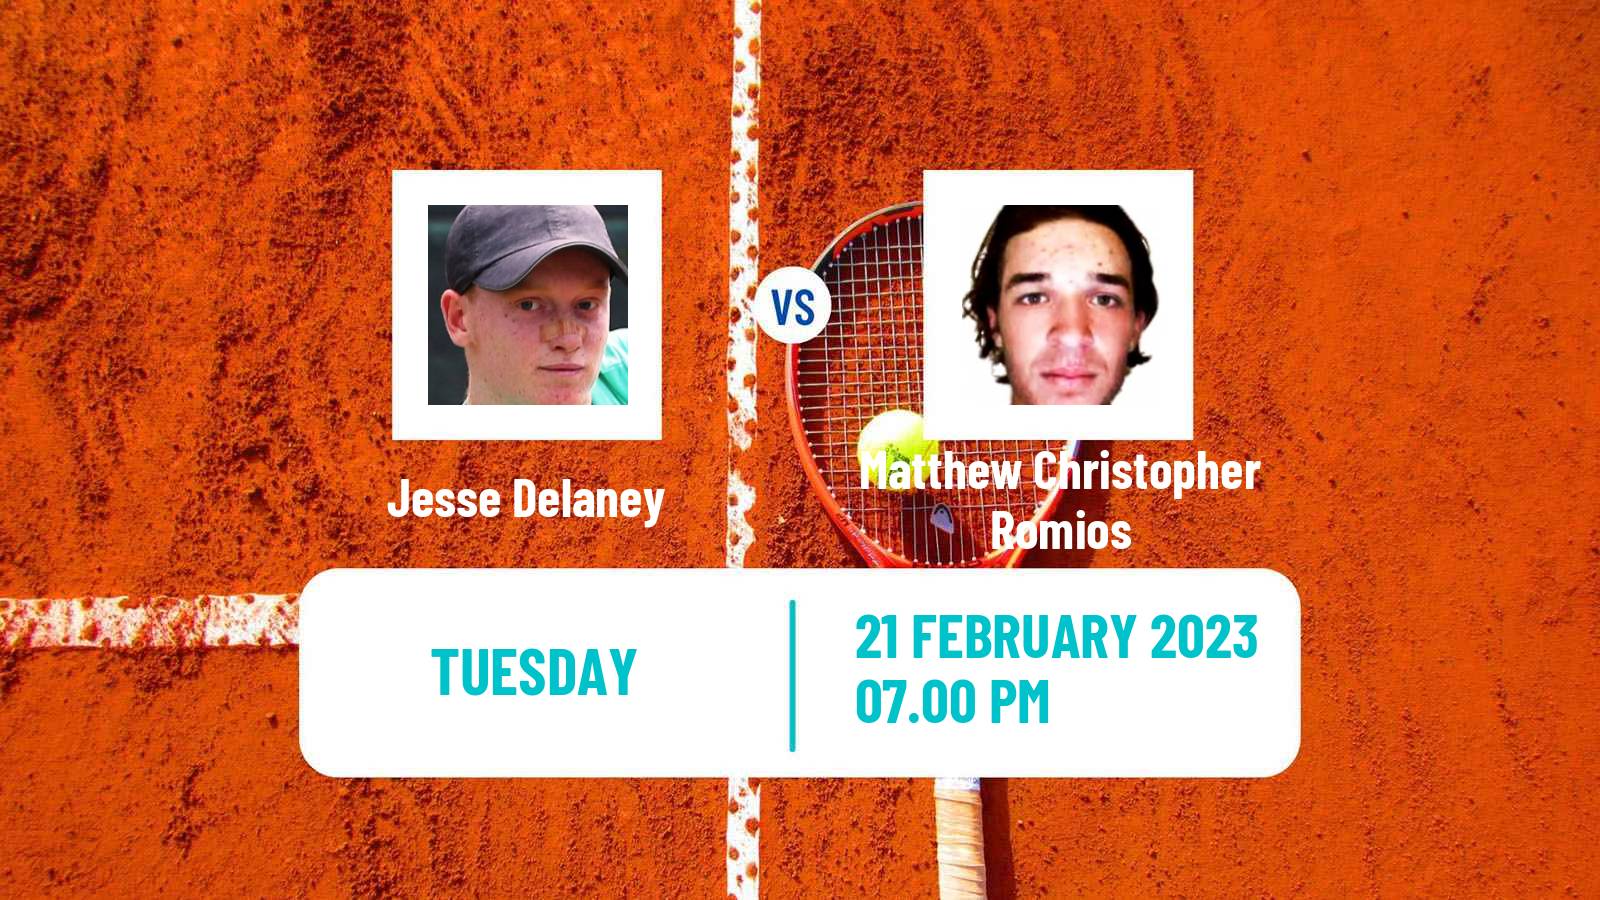 Tennis ITF Tournaments Jesse Delaney - Matthew Christopher Romios